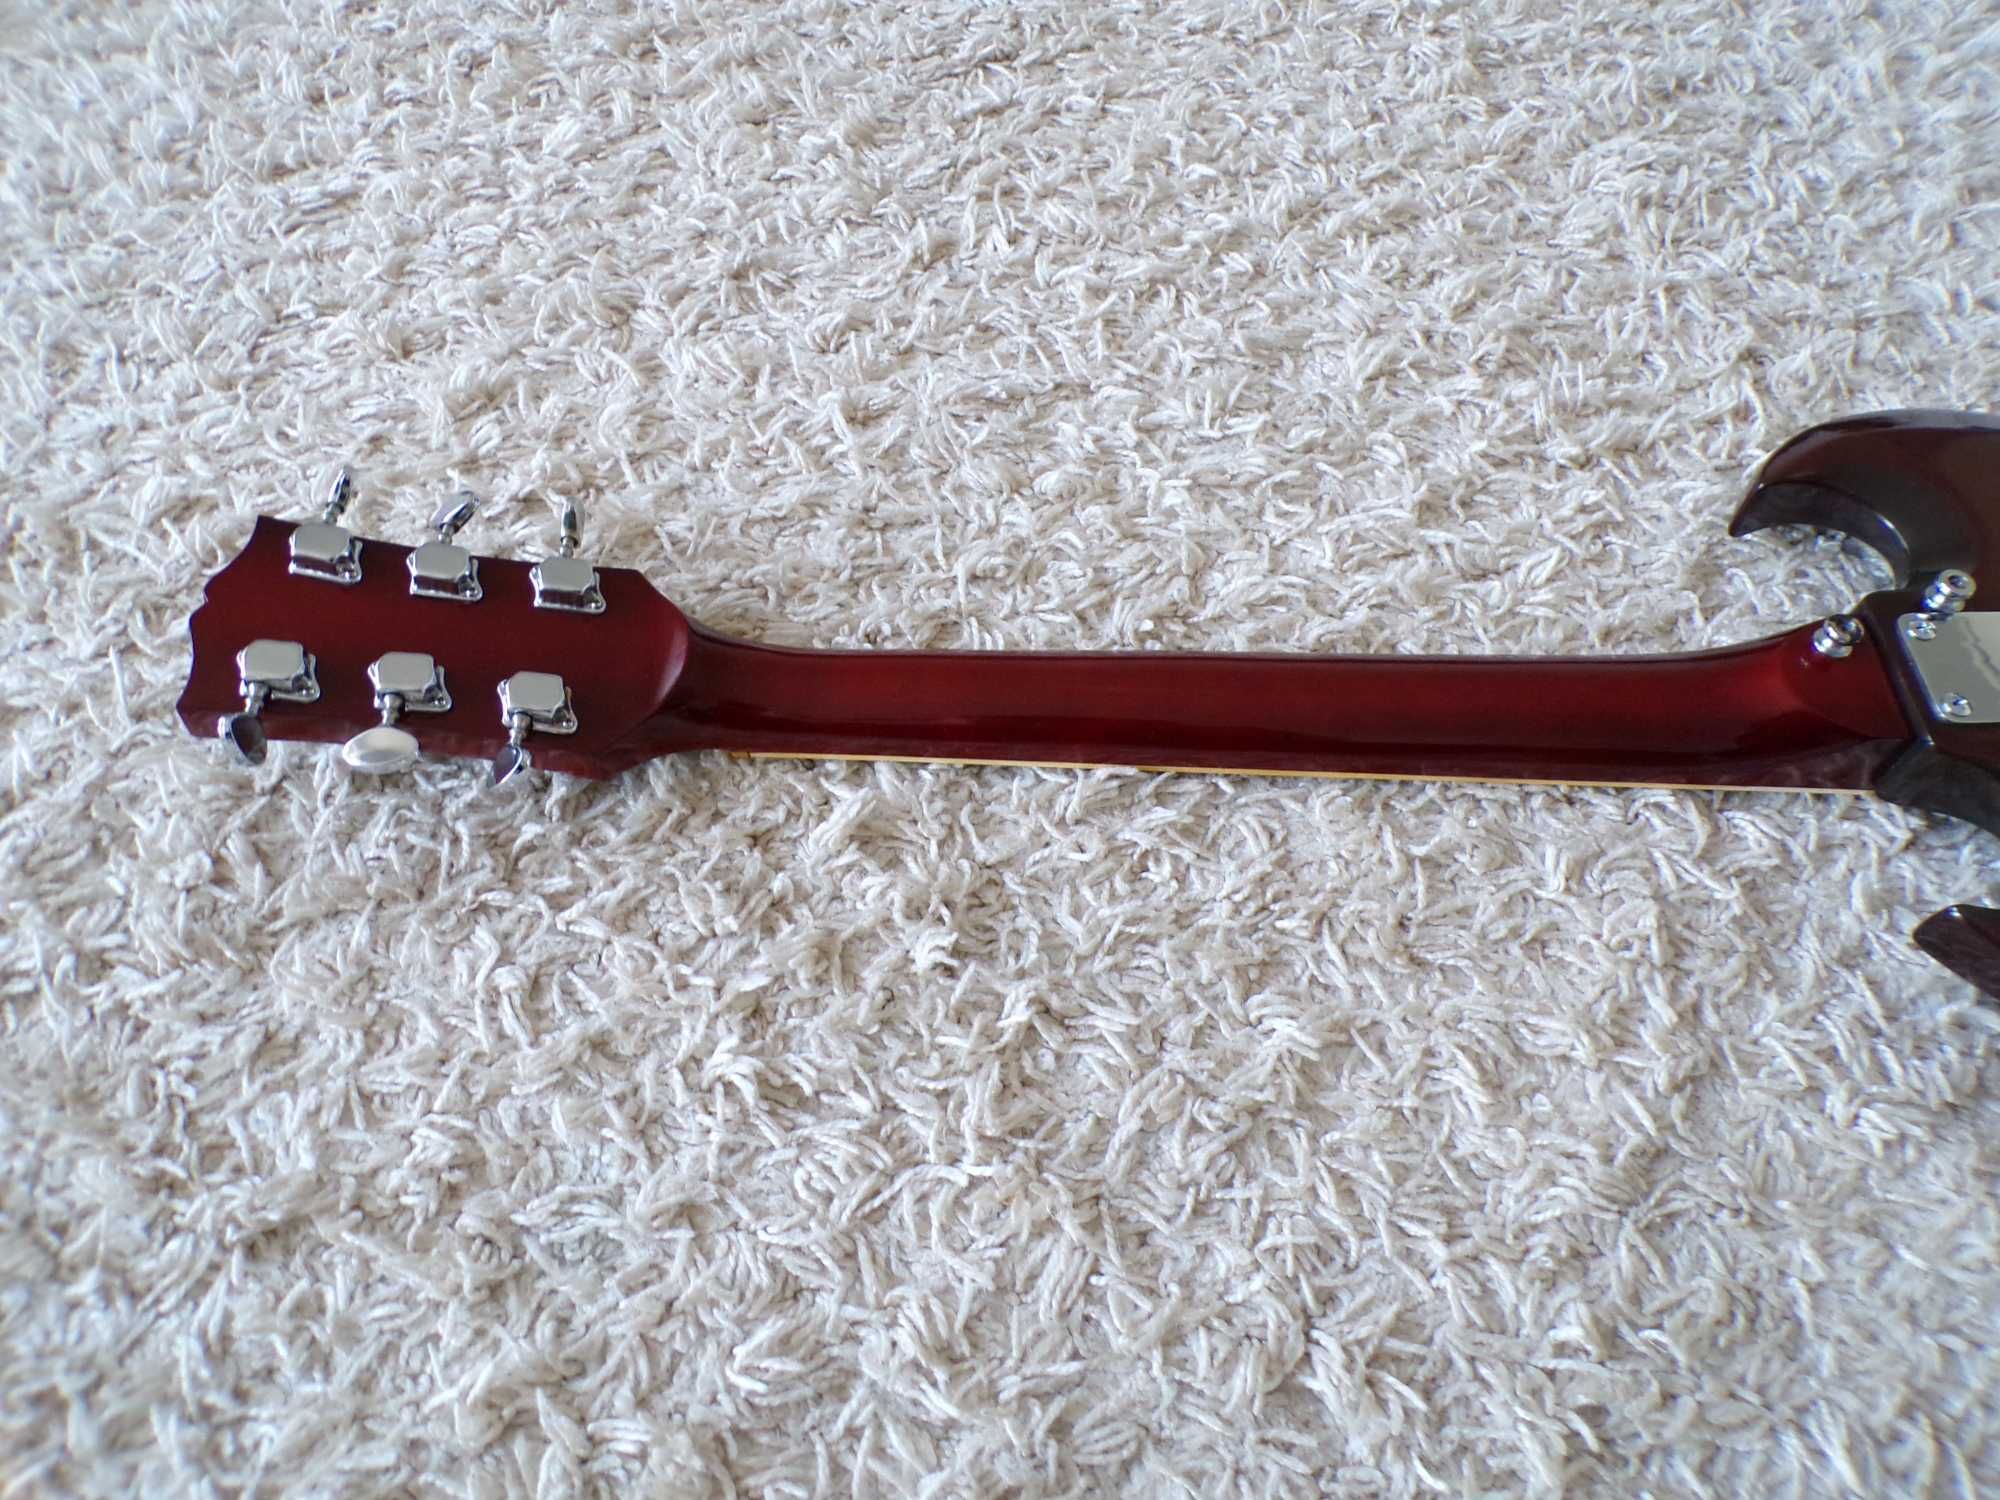 SG TEISCO guitar made in japan